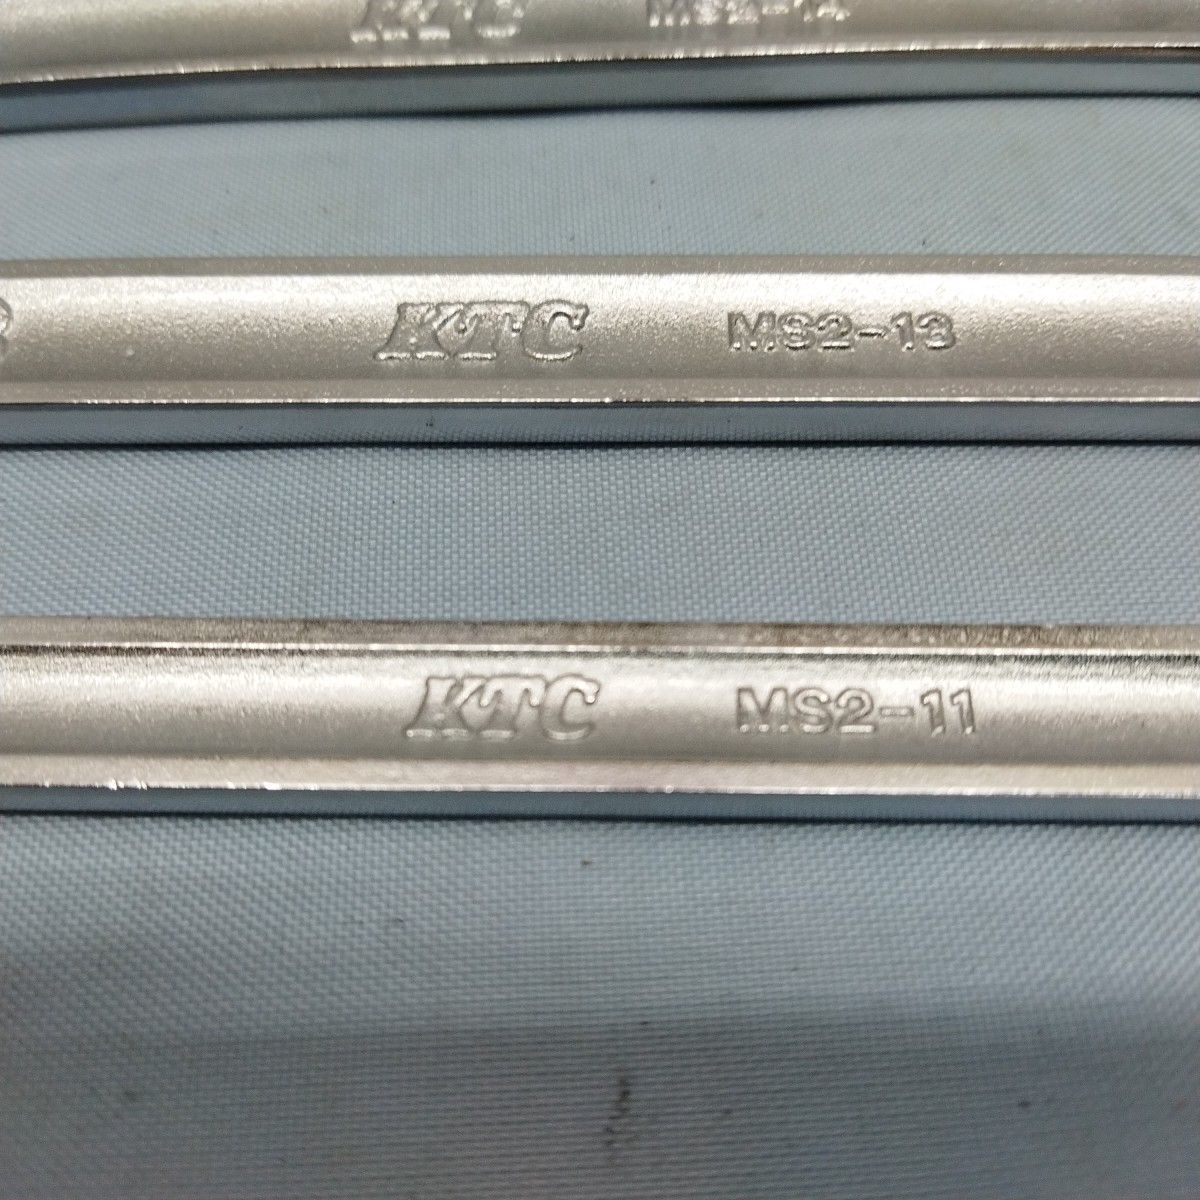 KTC MS2-11*13*14*17 combination wrench 4 pcs set *3116/ tool . bamboo shop 